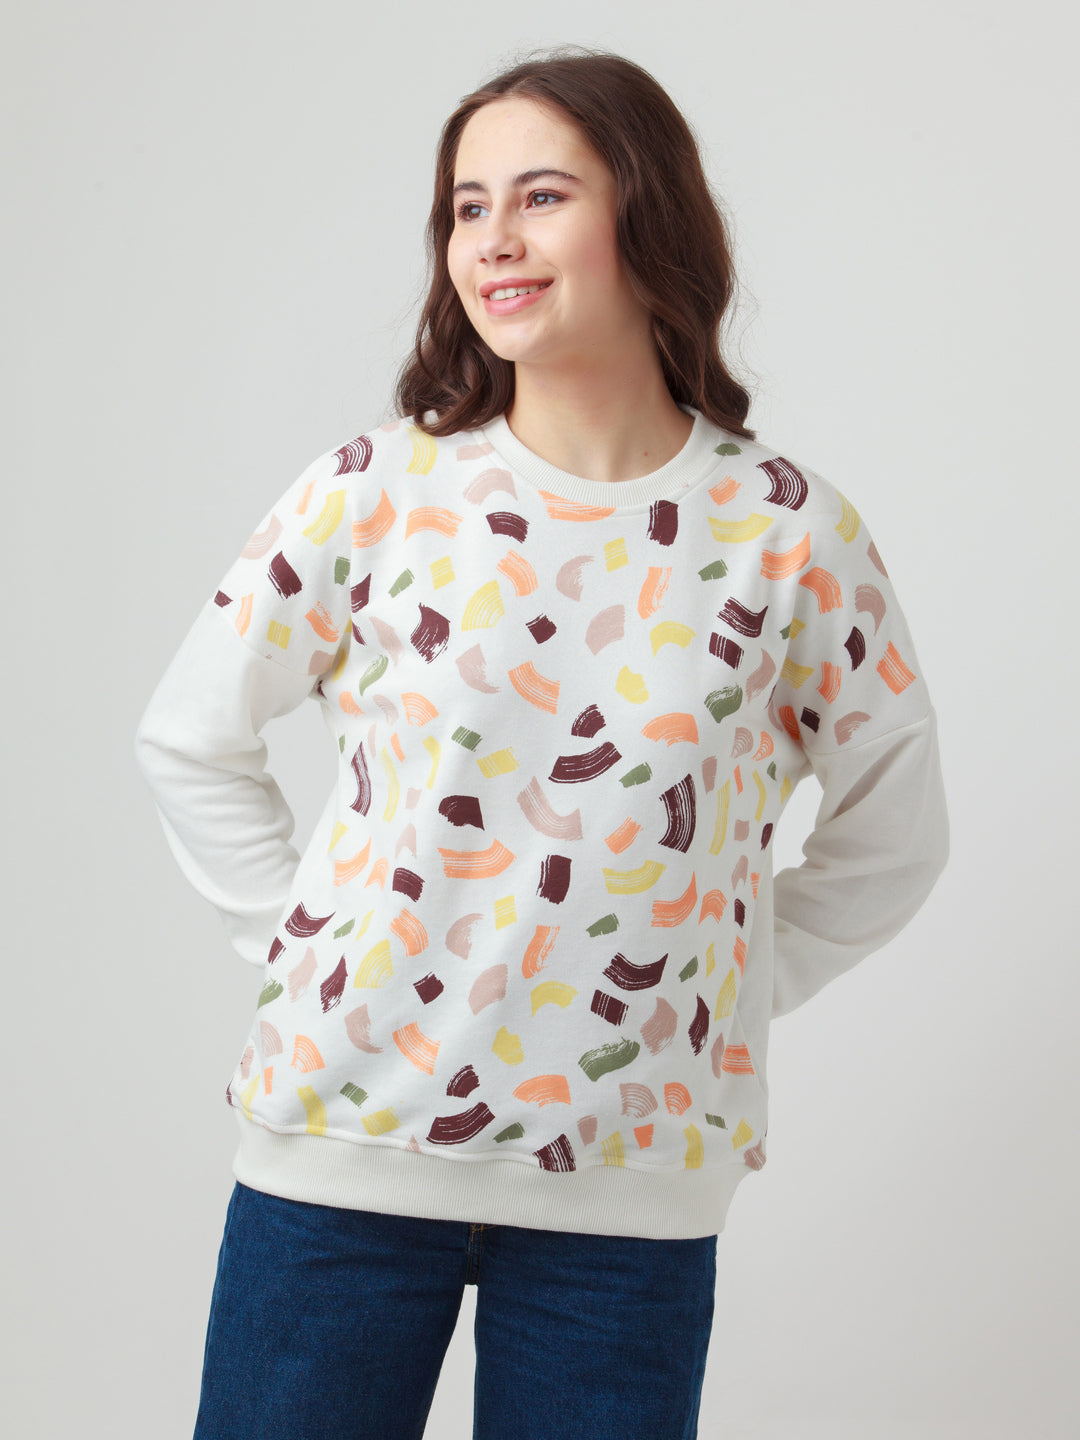 Multicolor Printed Sweatshirt For Women